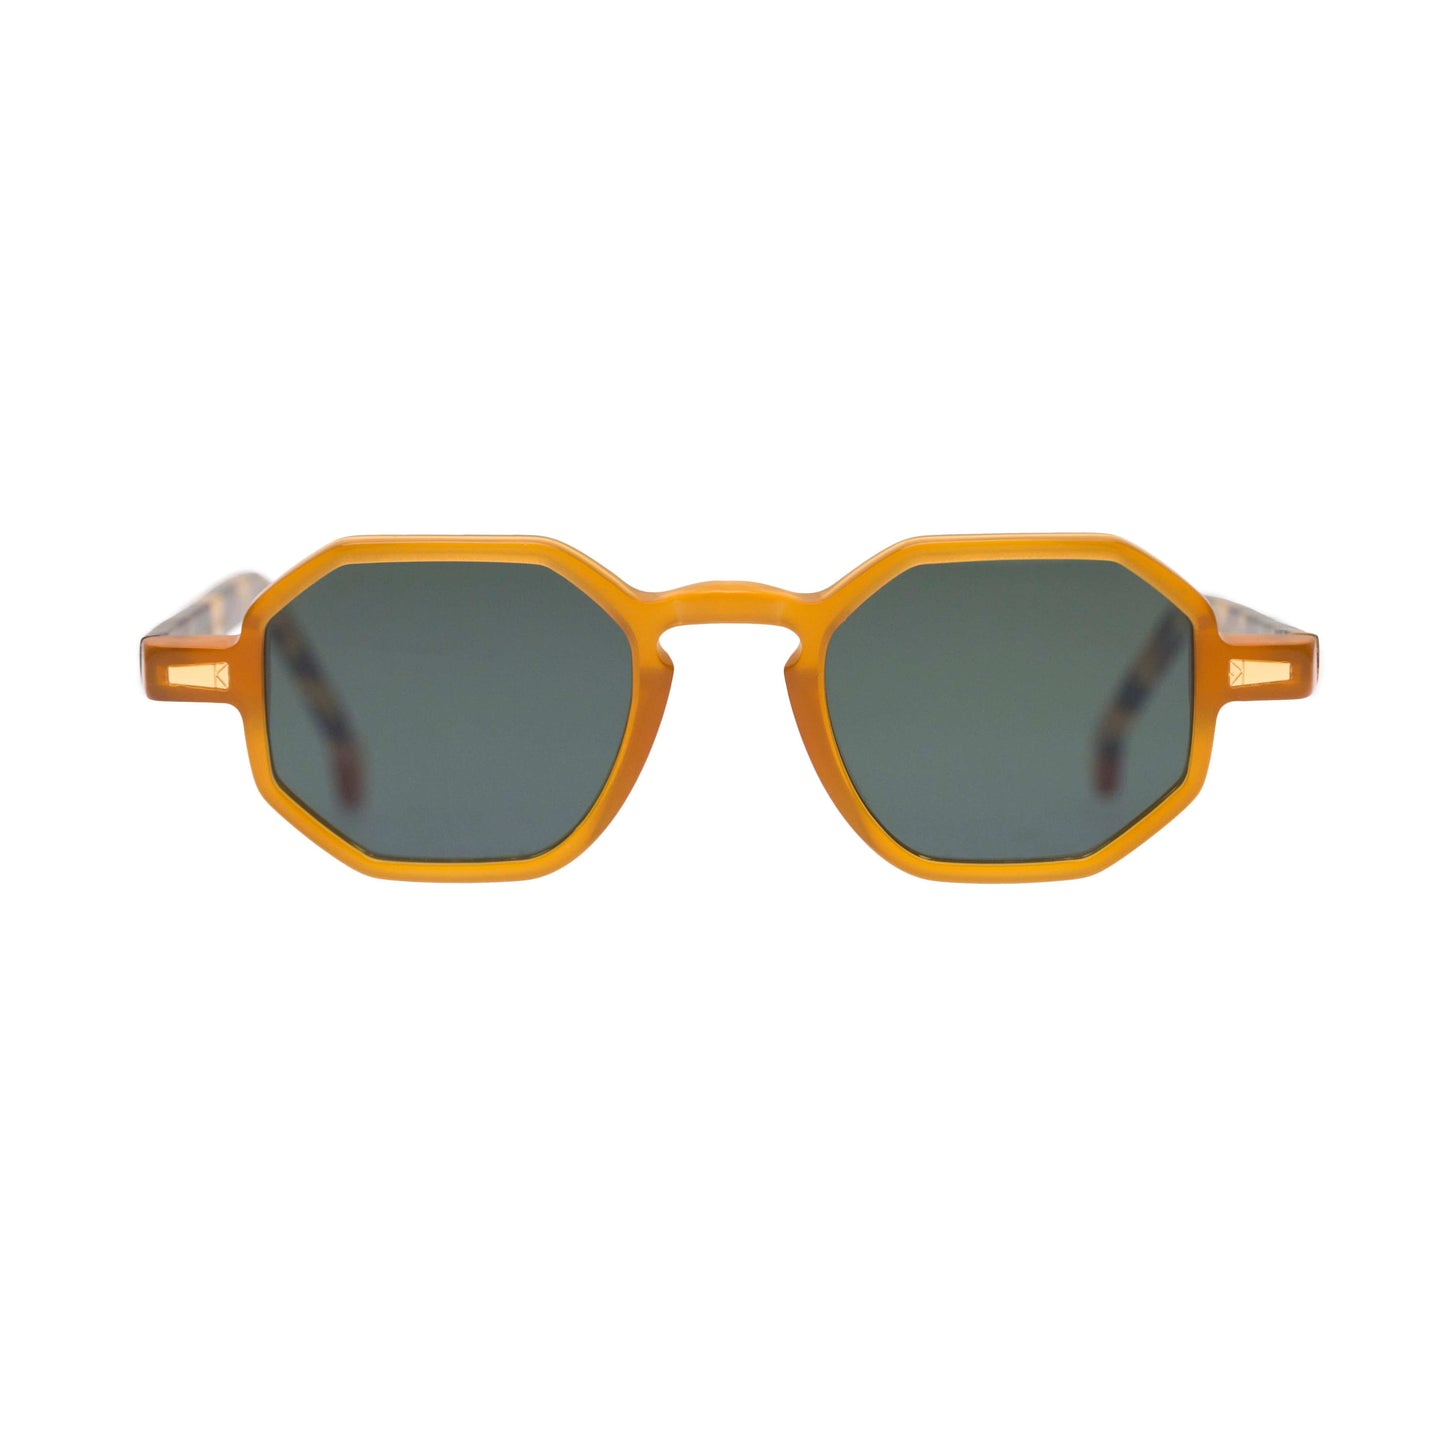 Kyme Occhiali da sole Miele - lente verde Kyme Rio: occhiale da sole poligonale made in Italy